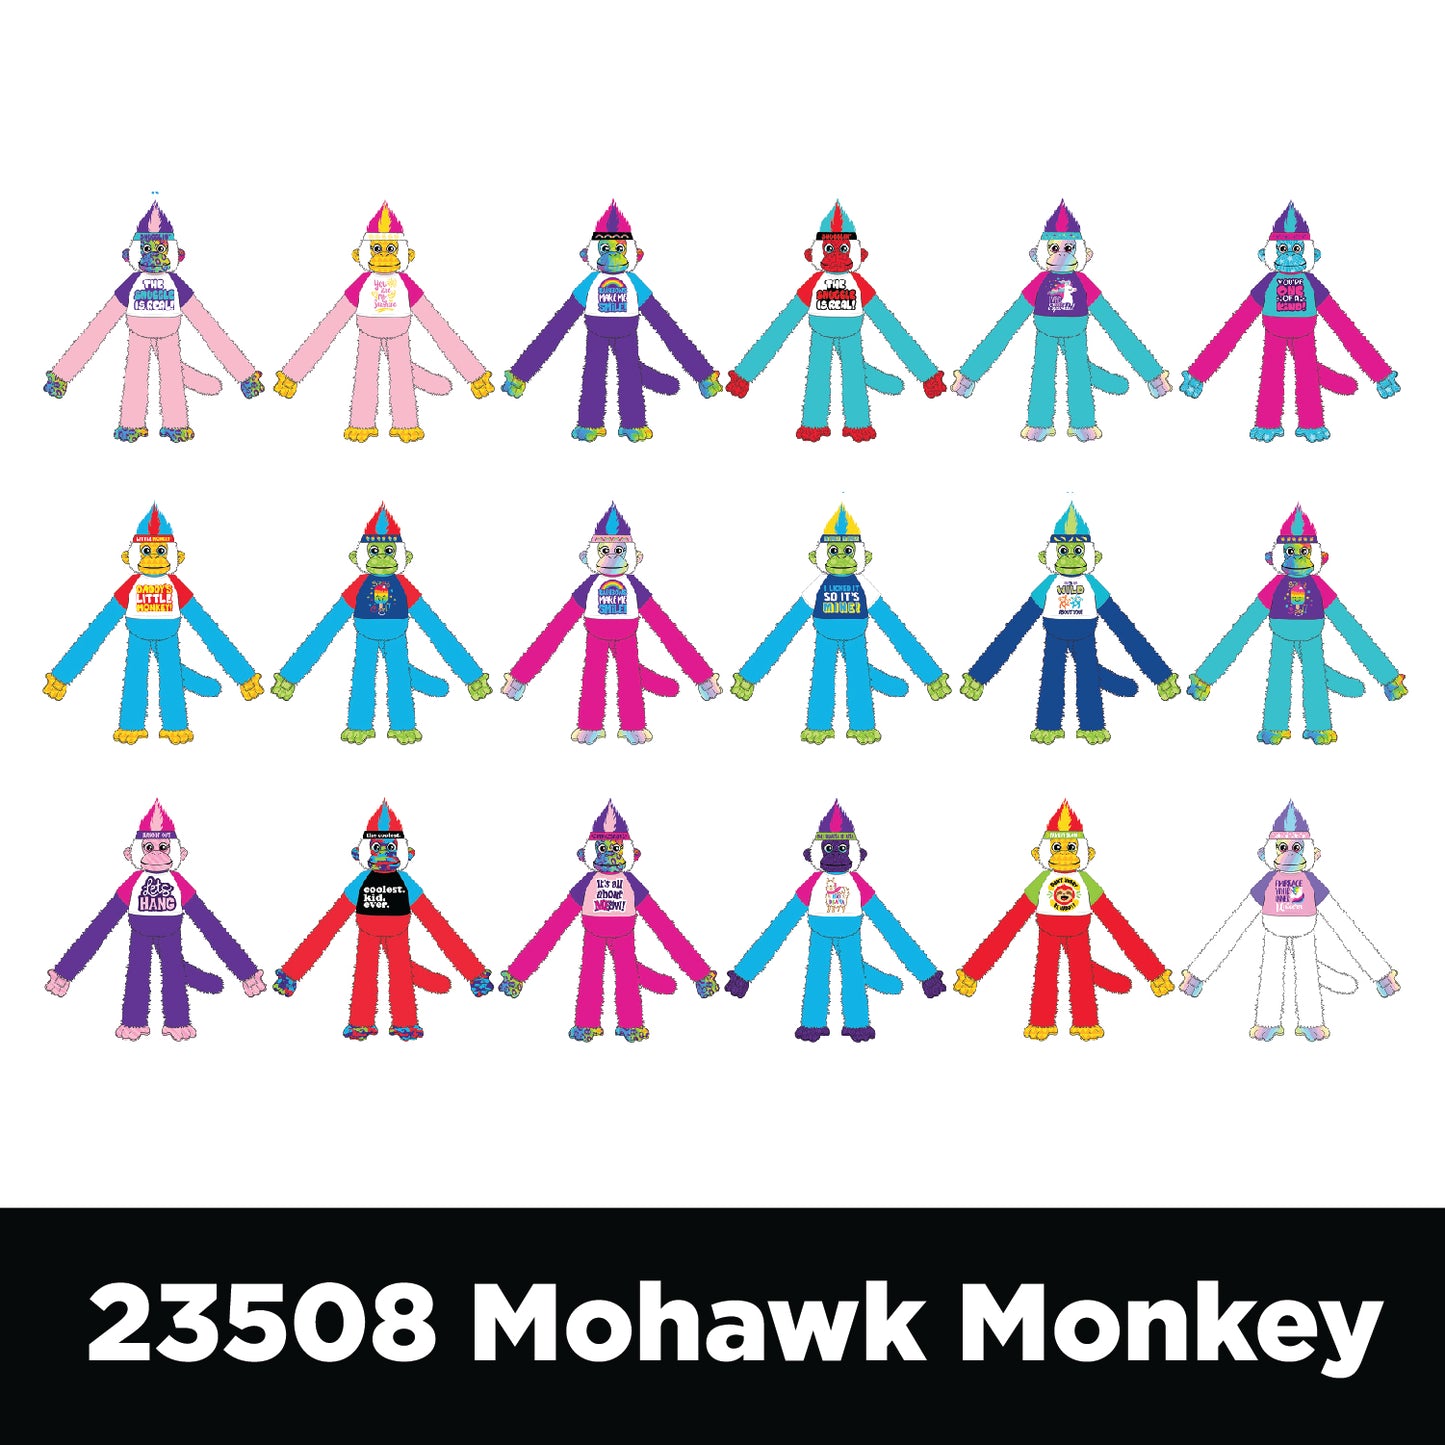 ITEM NUMBER 088436 MOHAWK MONKEY D2 FD KIT 30 PIECES PER DISPLAY